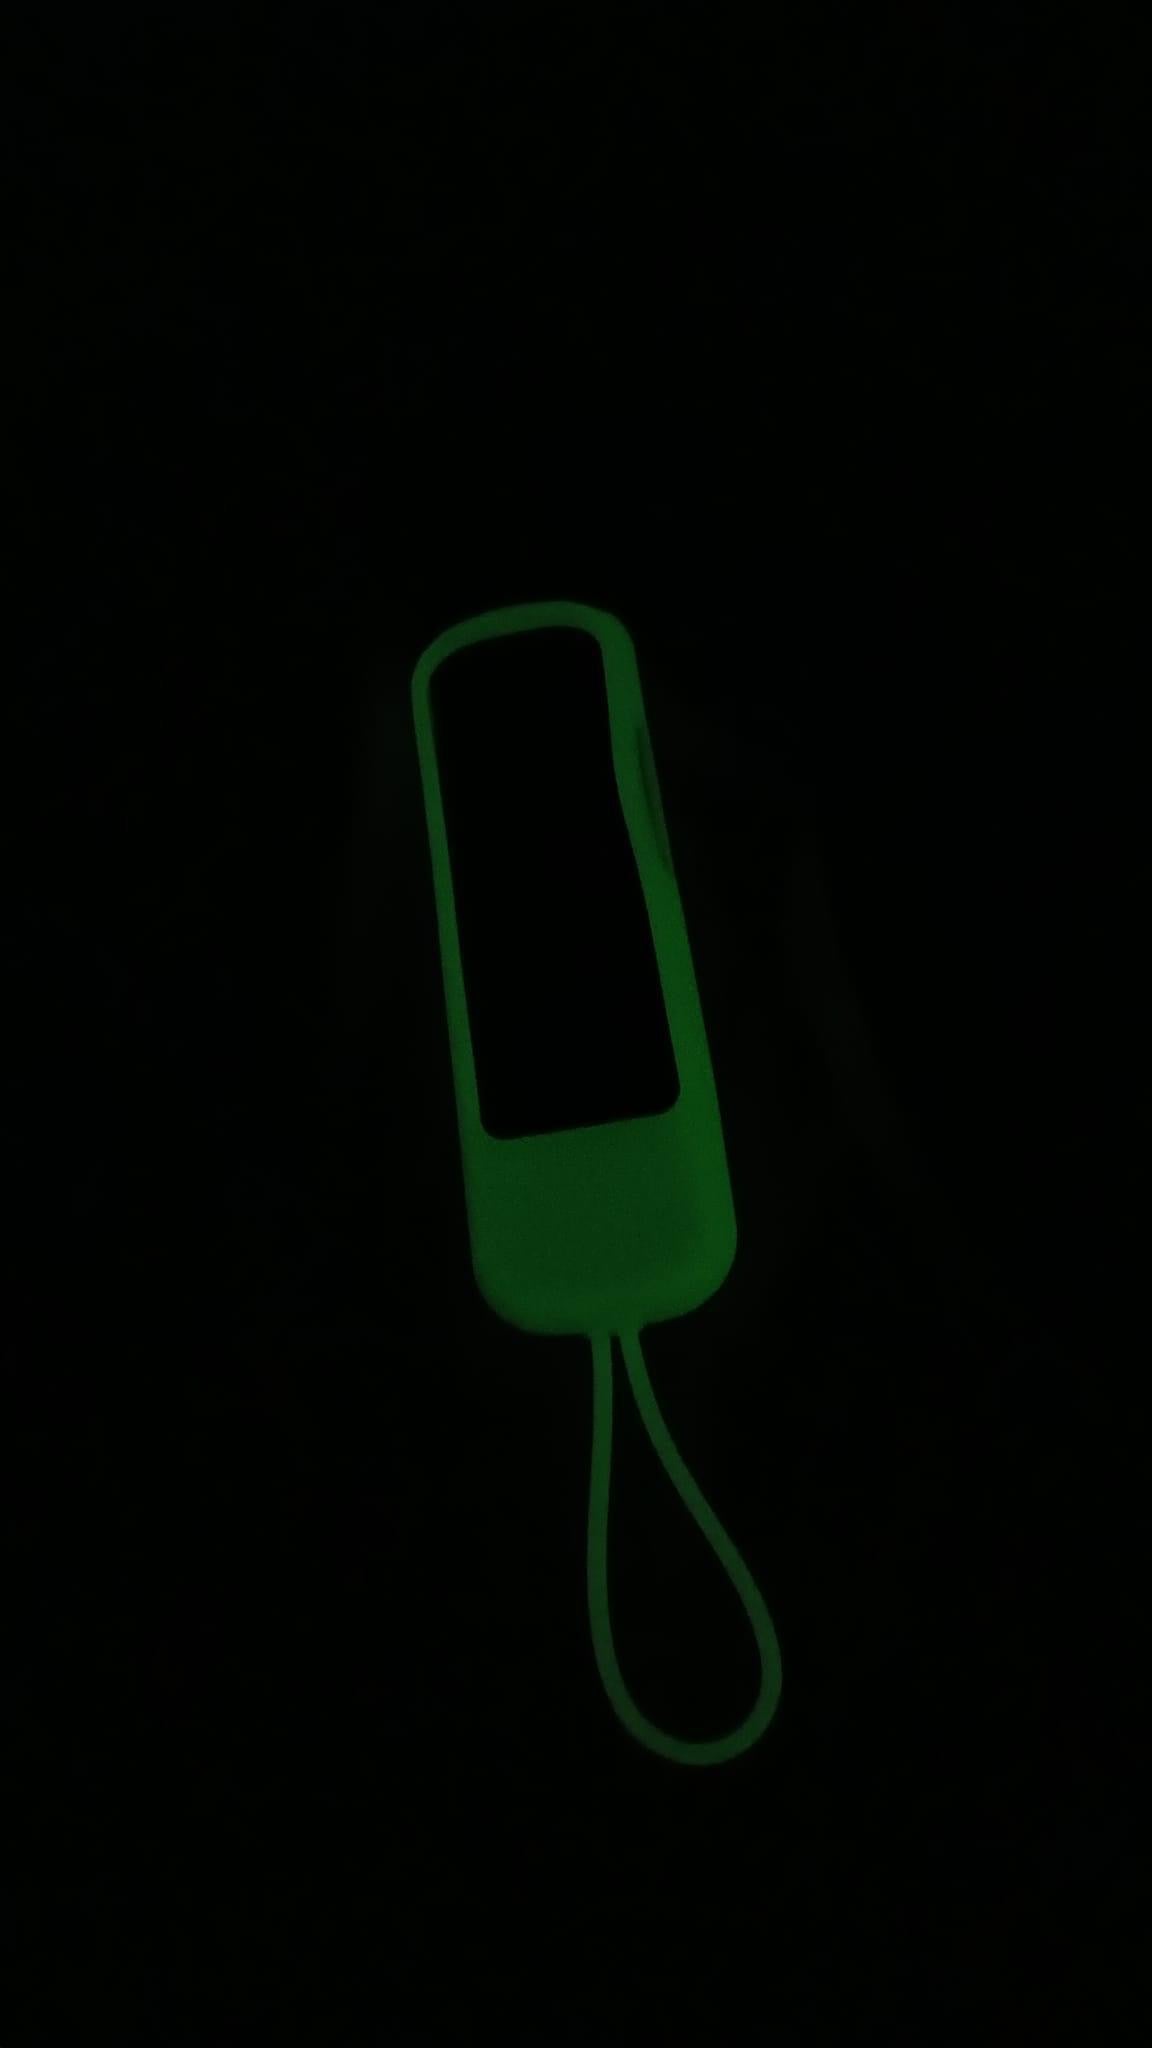 Glow in the Dark Roku Remote Cover